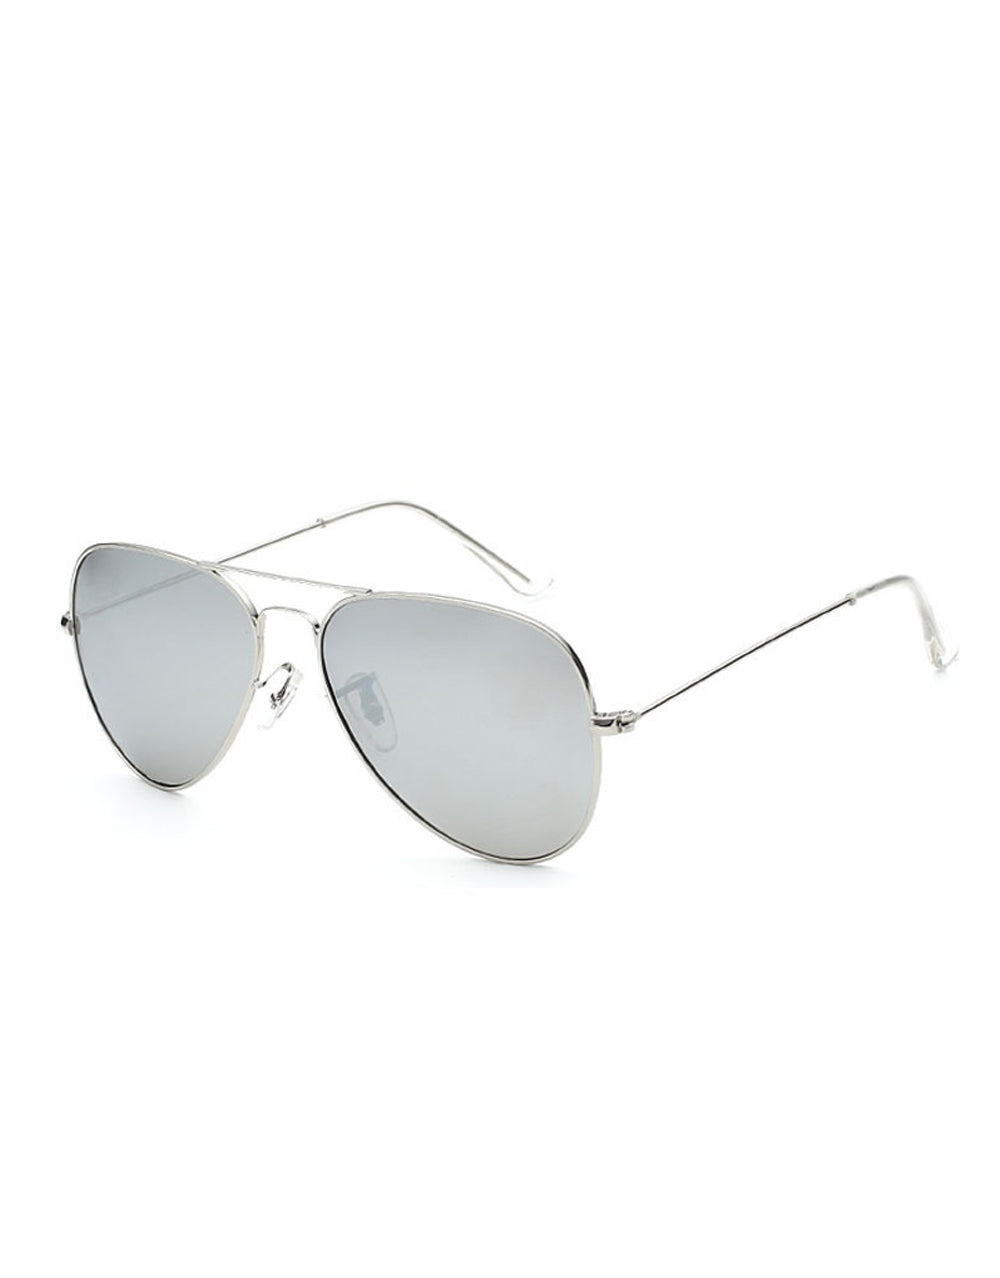 T1000 Style Aviator Cop Sunglasses, Silver Frame / Full Mirror Lens